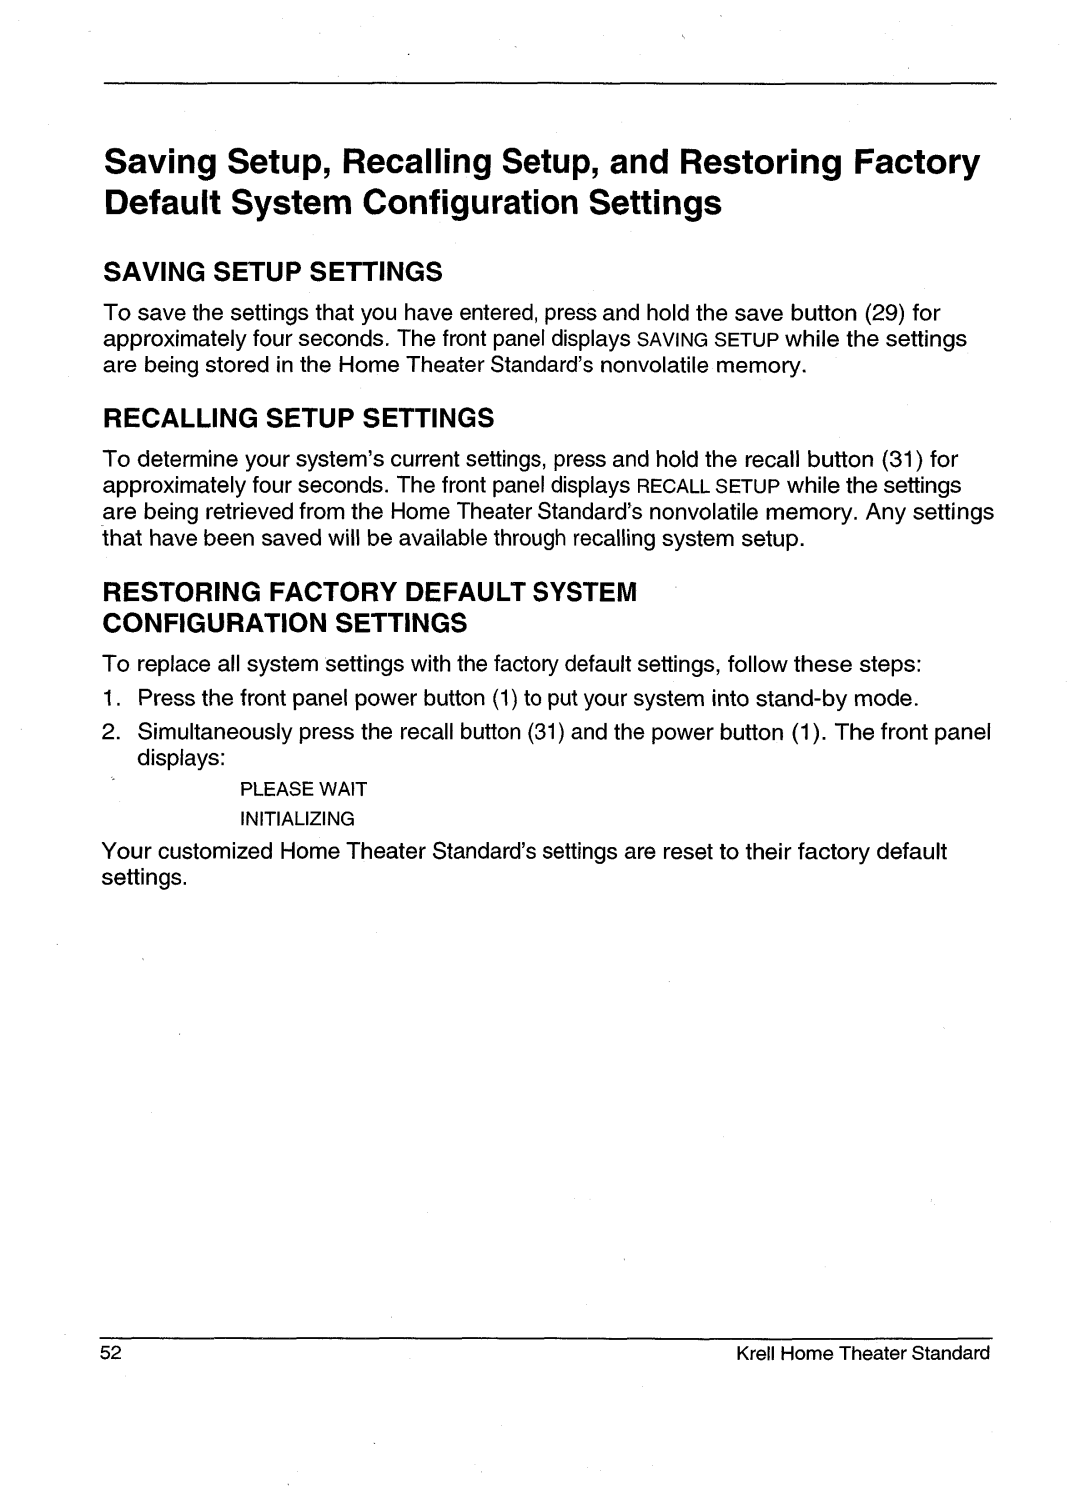 Krell Industries HTS 2 manual Saving Setup Settings, Recalling Setup Settings, Restoring Factory Default System 